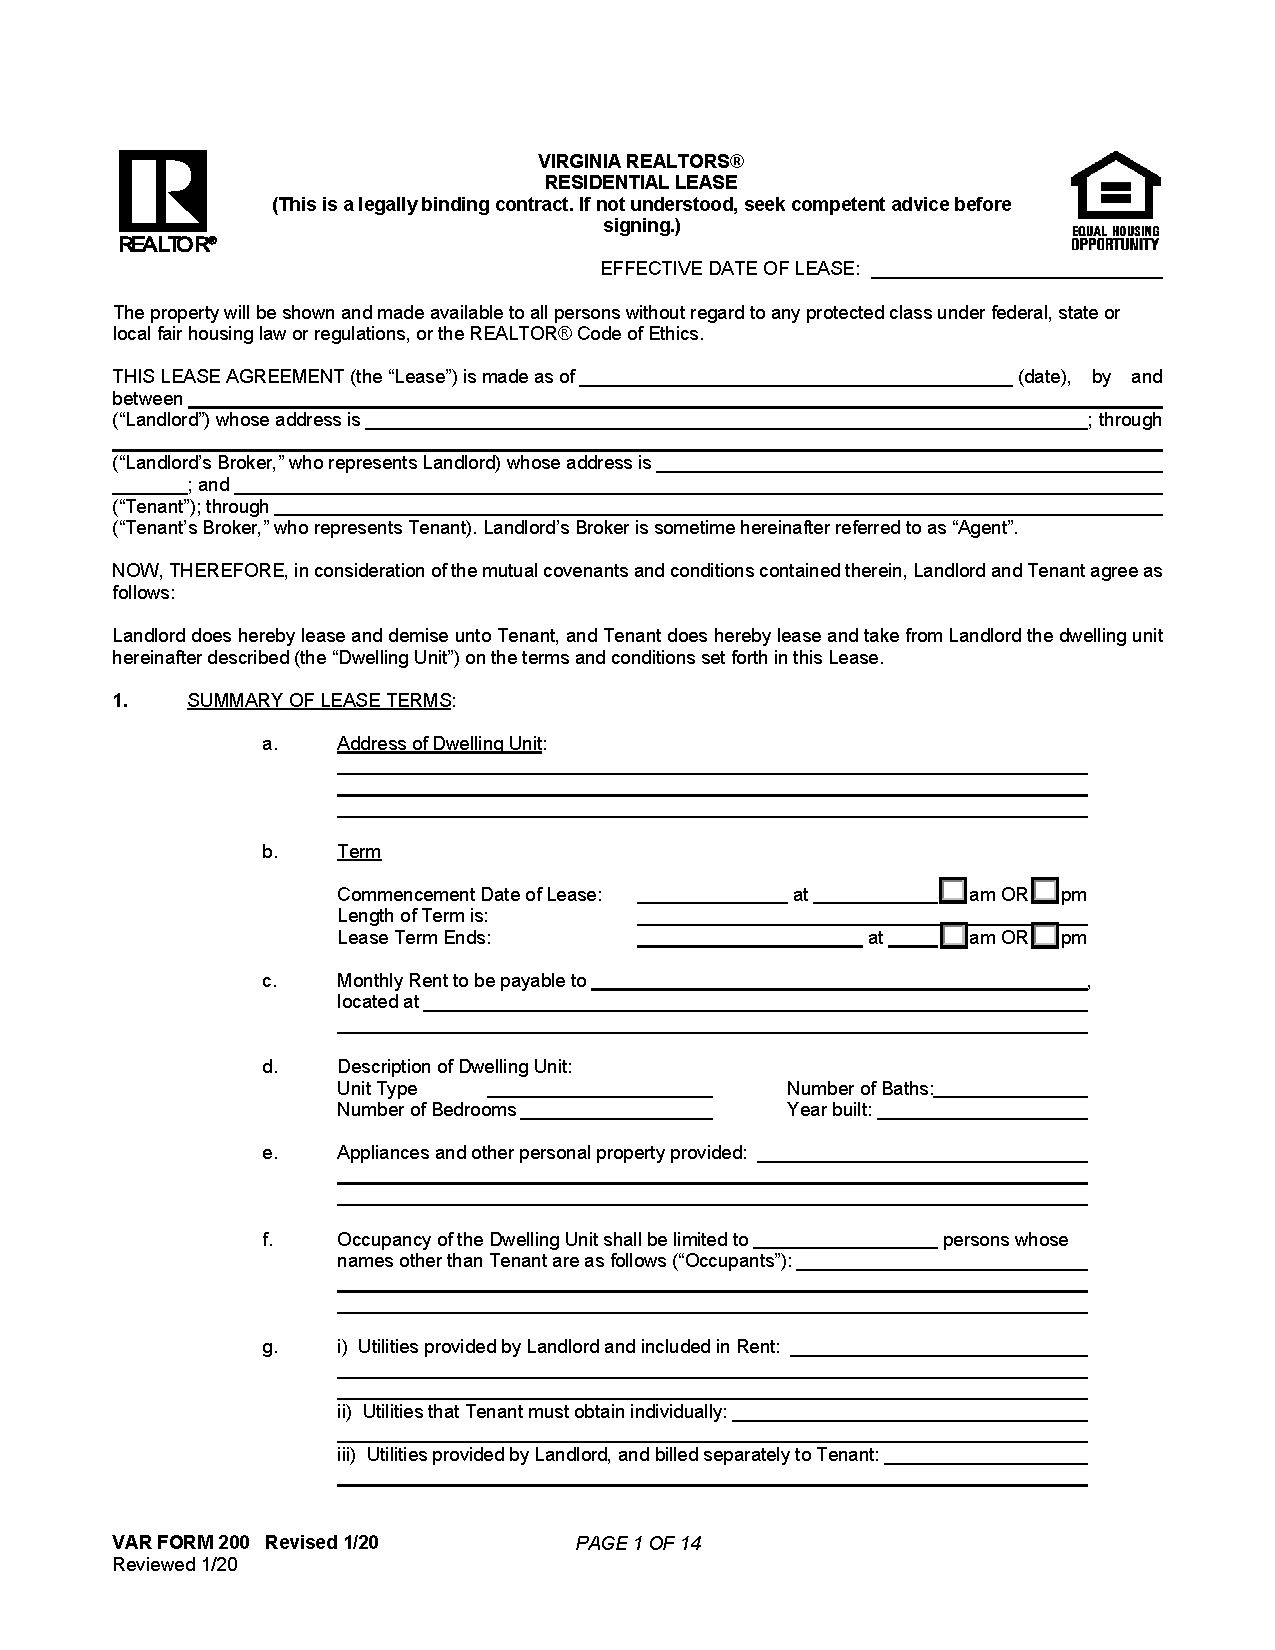 free-virginia-standard-residential-lease-agreement-pdf